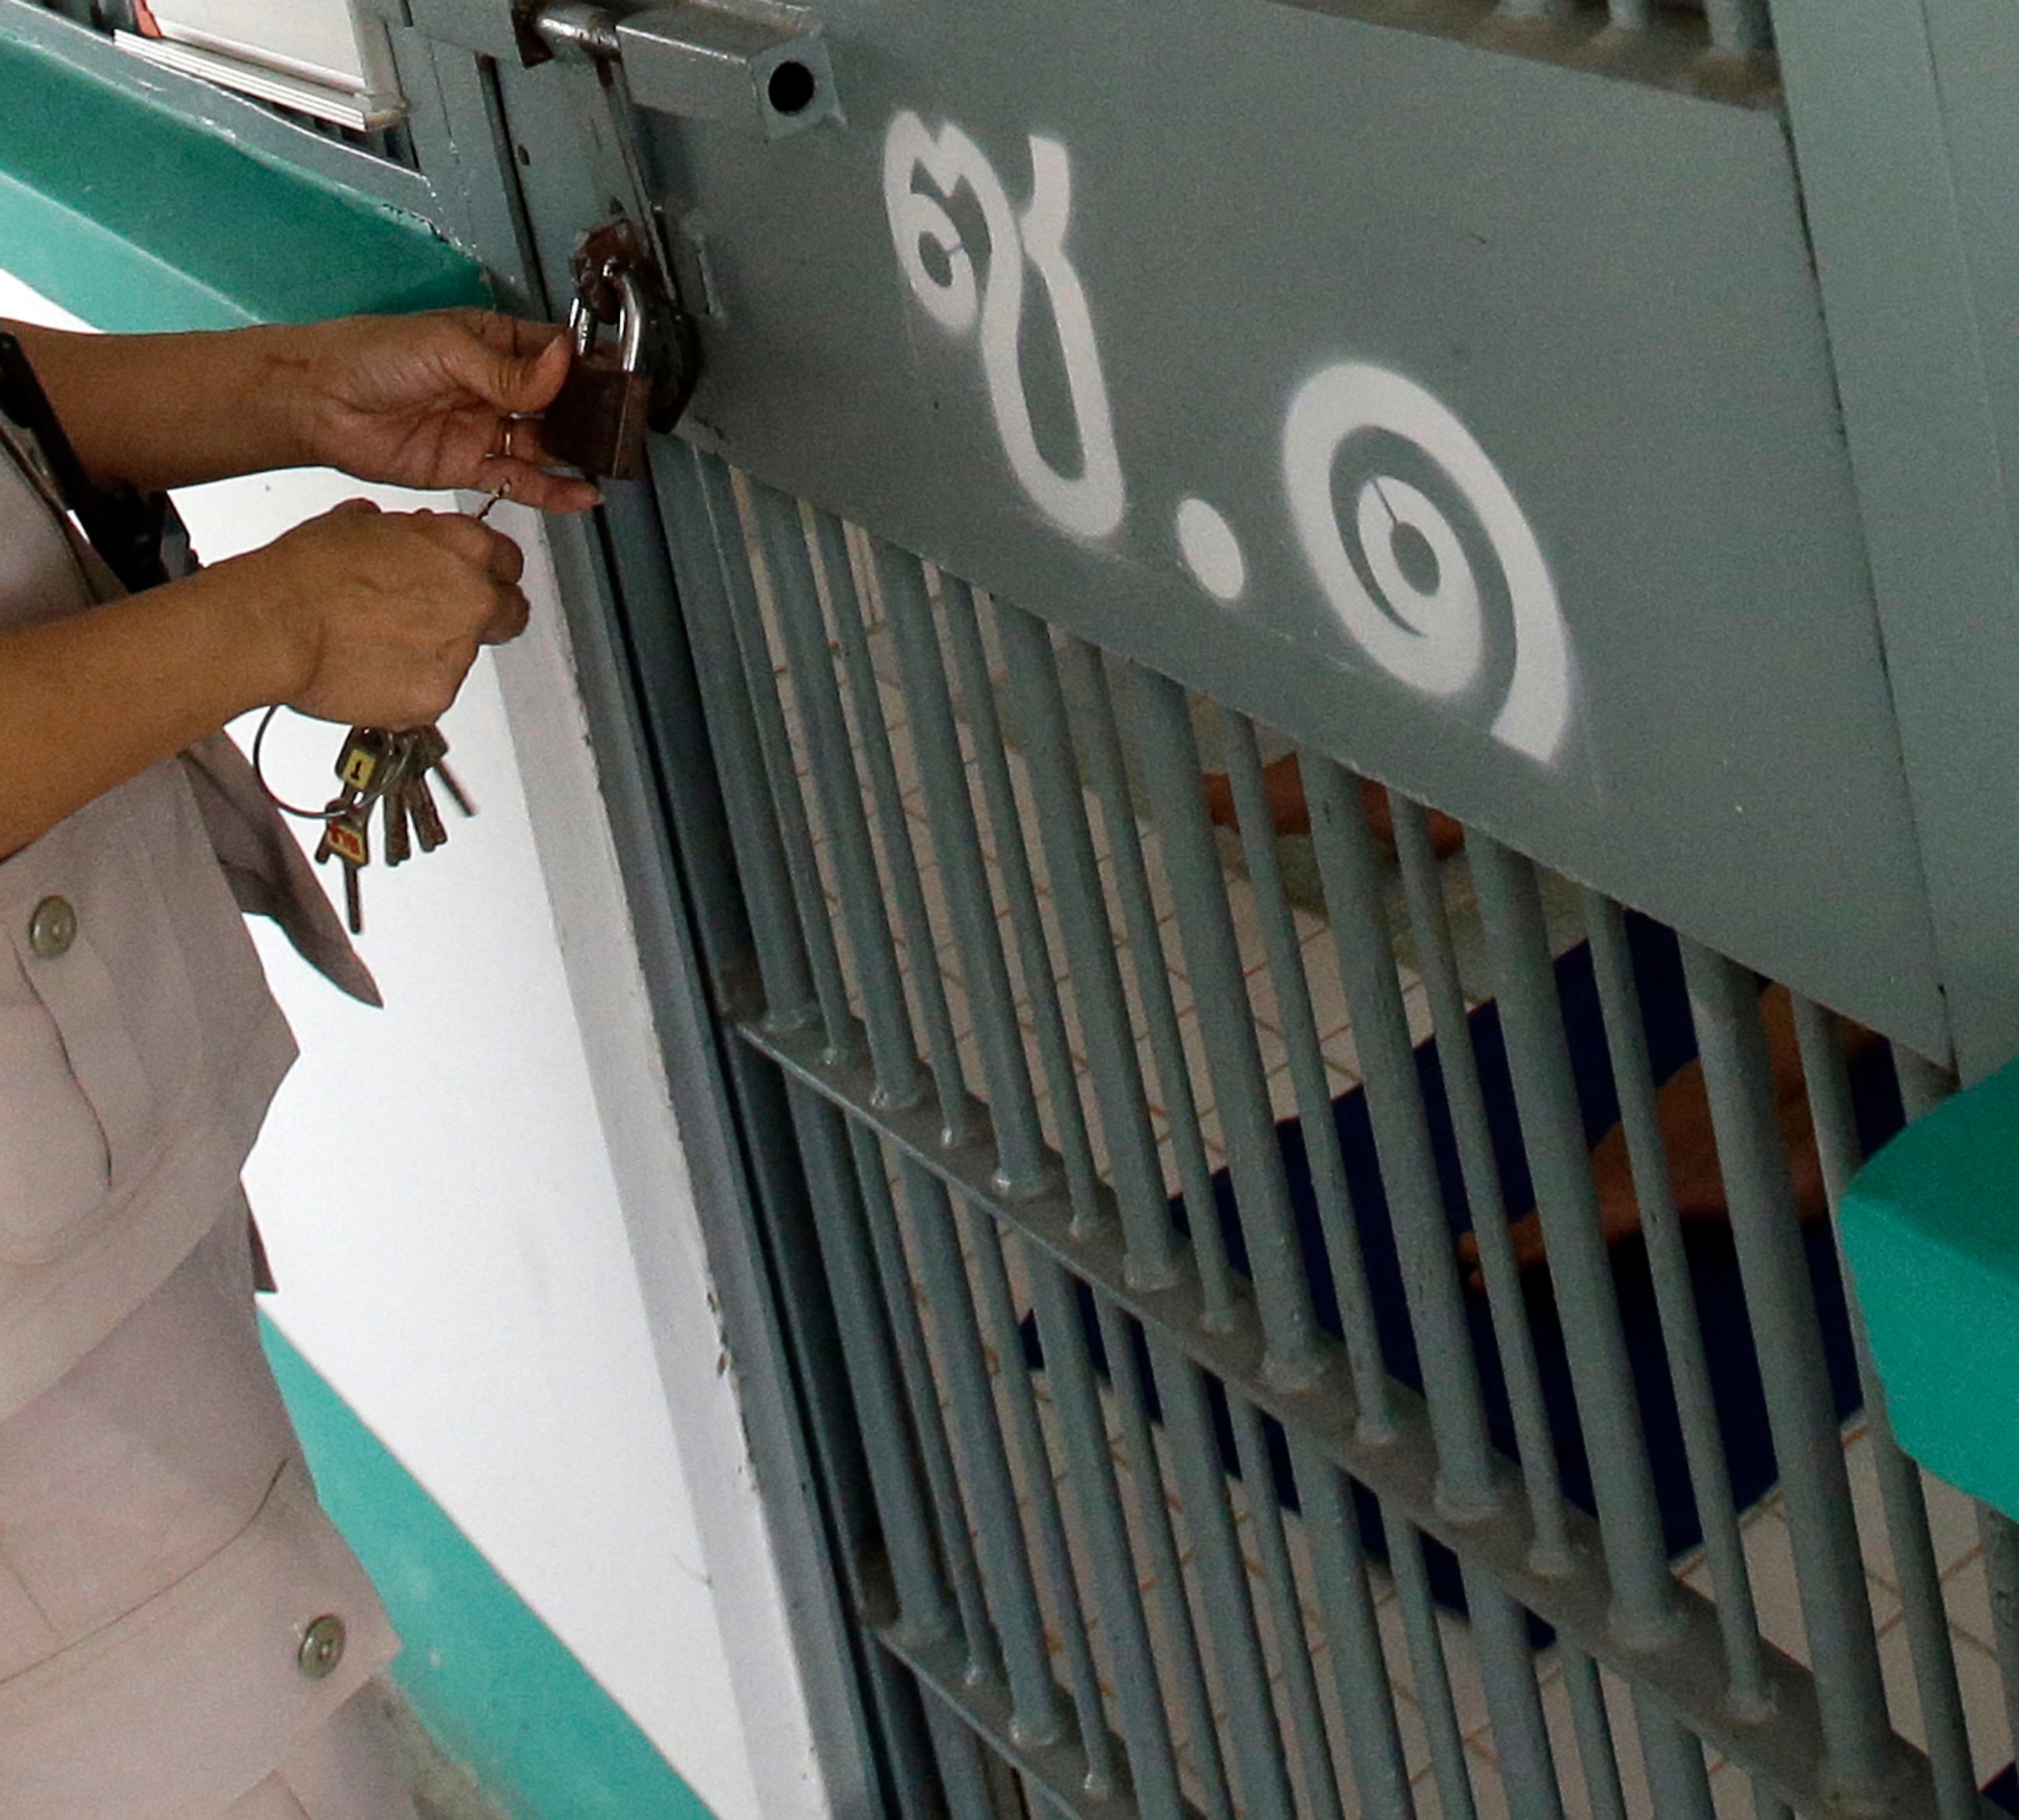 Thailand: COVID-19 Rumors Trigger Prison Riot